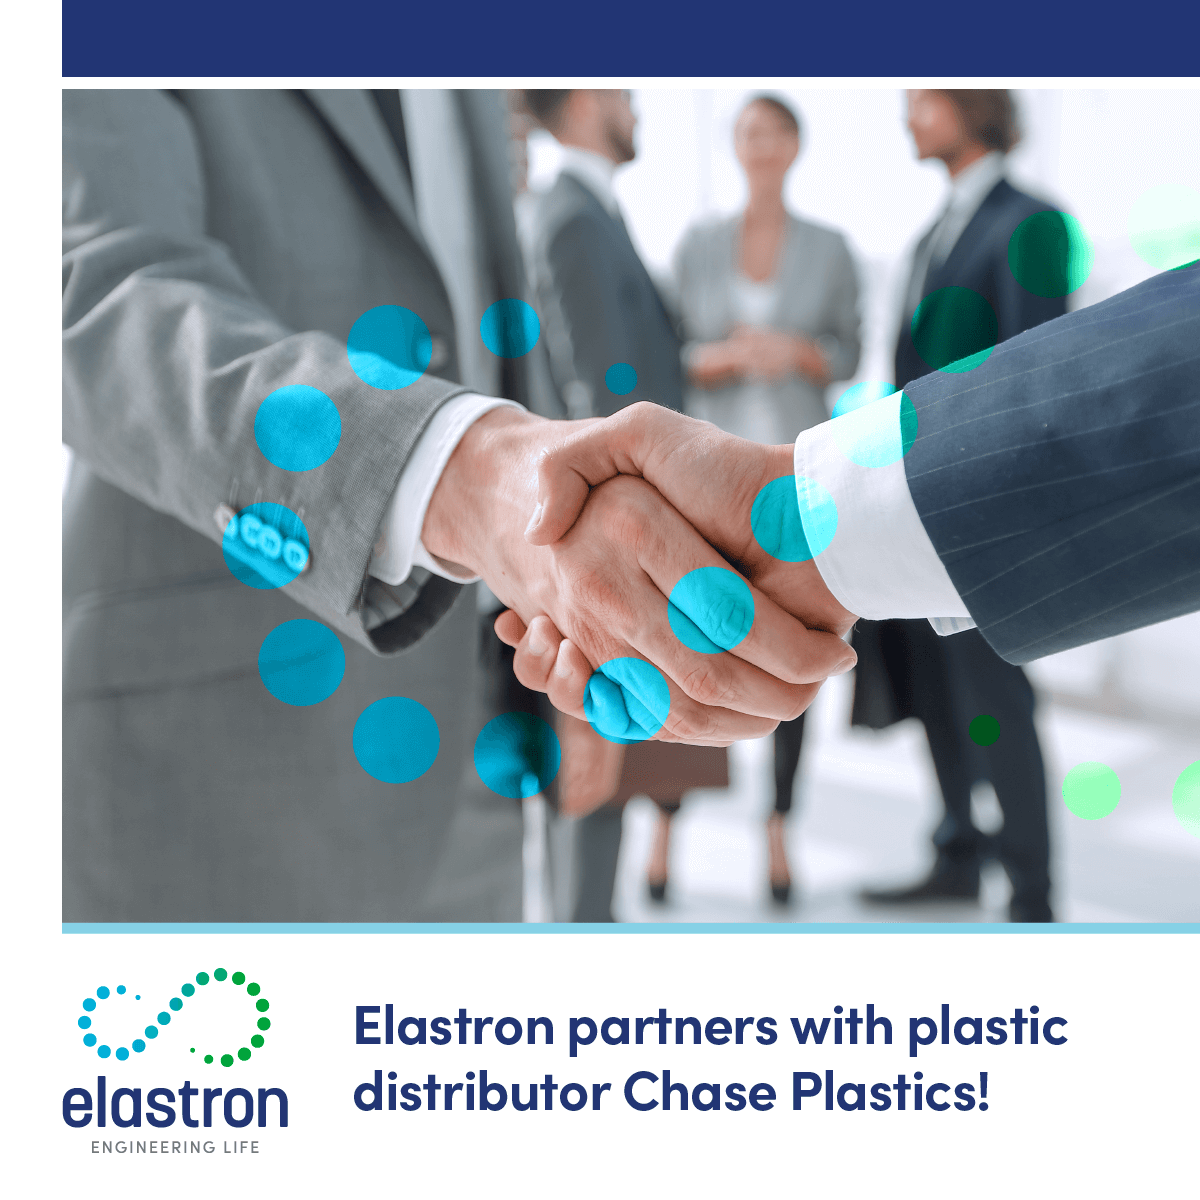 Elastron partners with plastic distributor Chase Plastics!